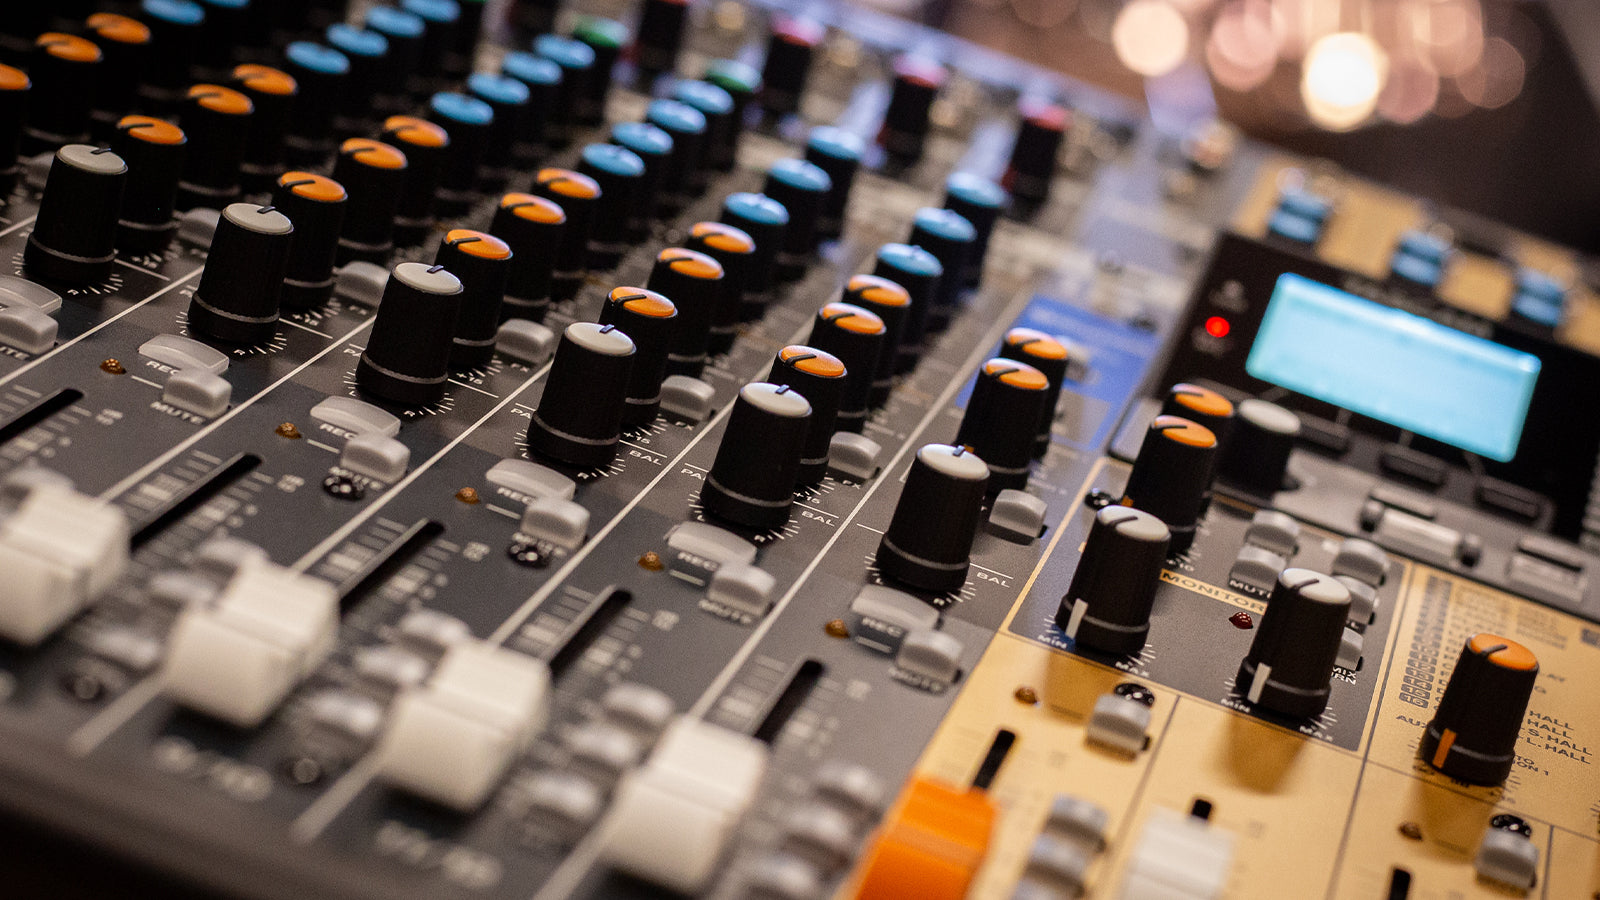 A TASCAM mixer in a recording studio